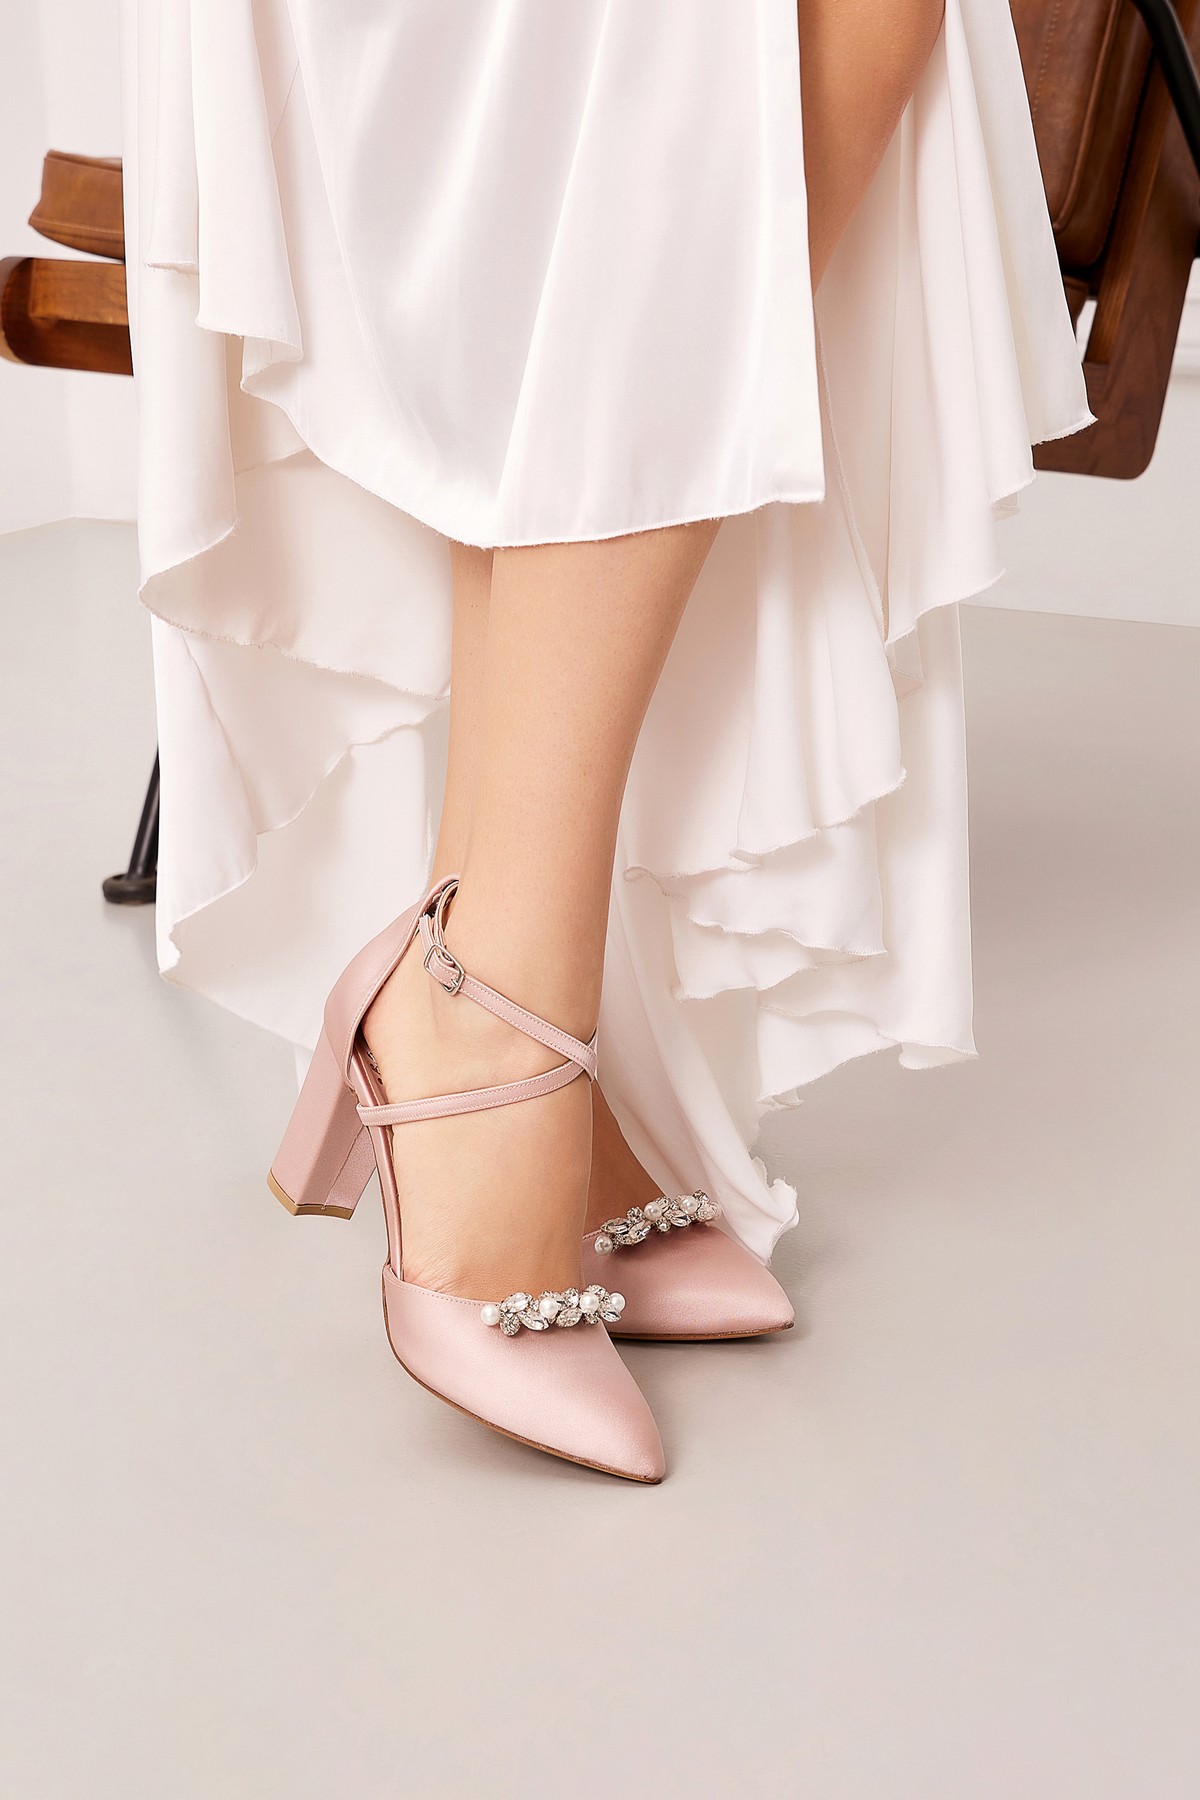 wedding block heels rhinestone